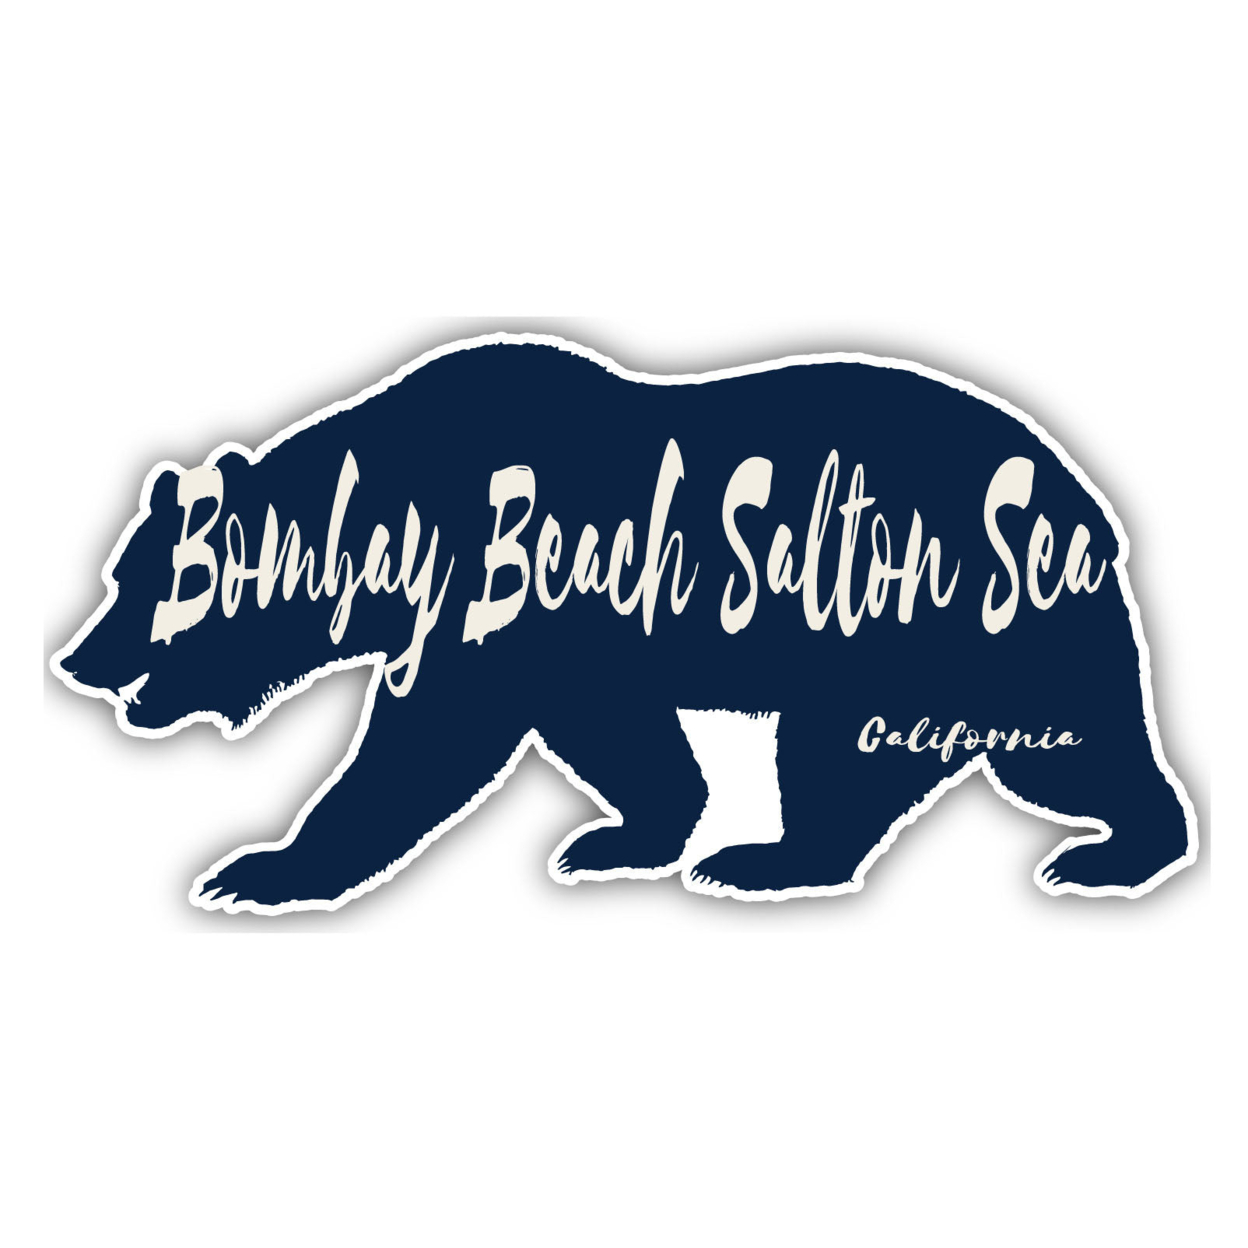 Bombay Beach Salton Sea California Souvenir Decorative Stickers (Choose Theme And Size) - Single Unit, 2-Inch, Bear